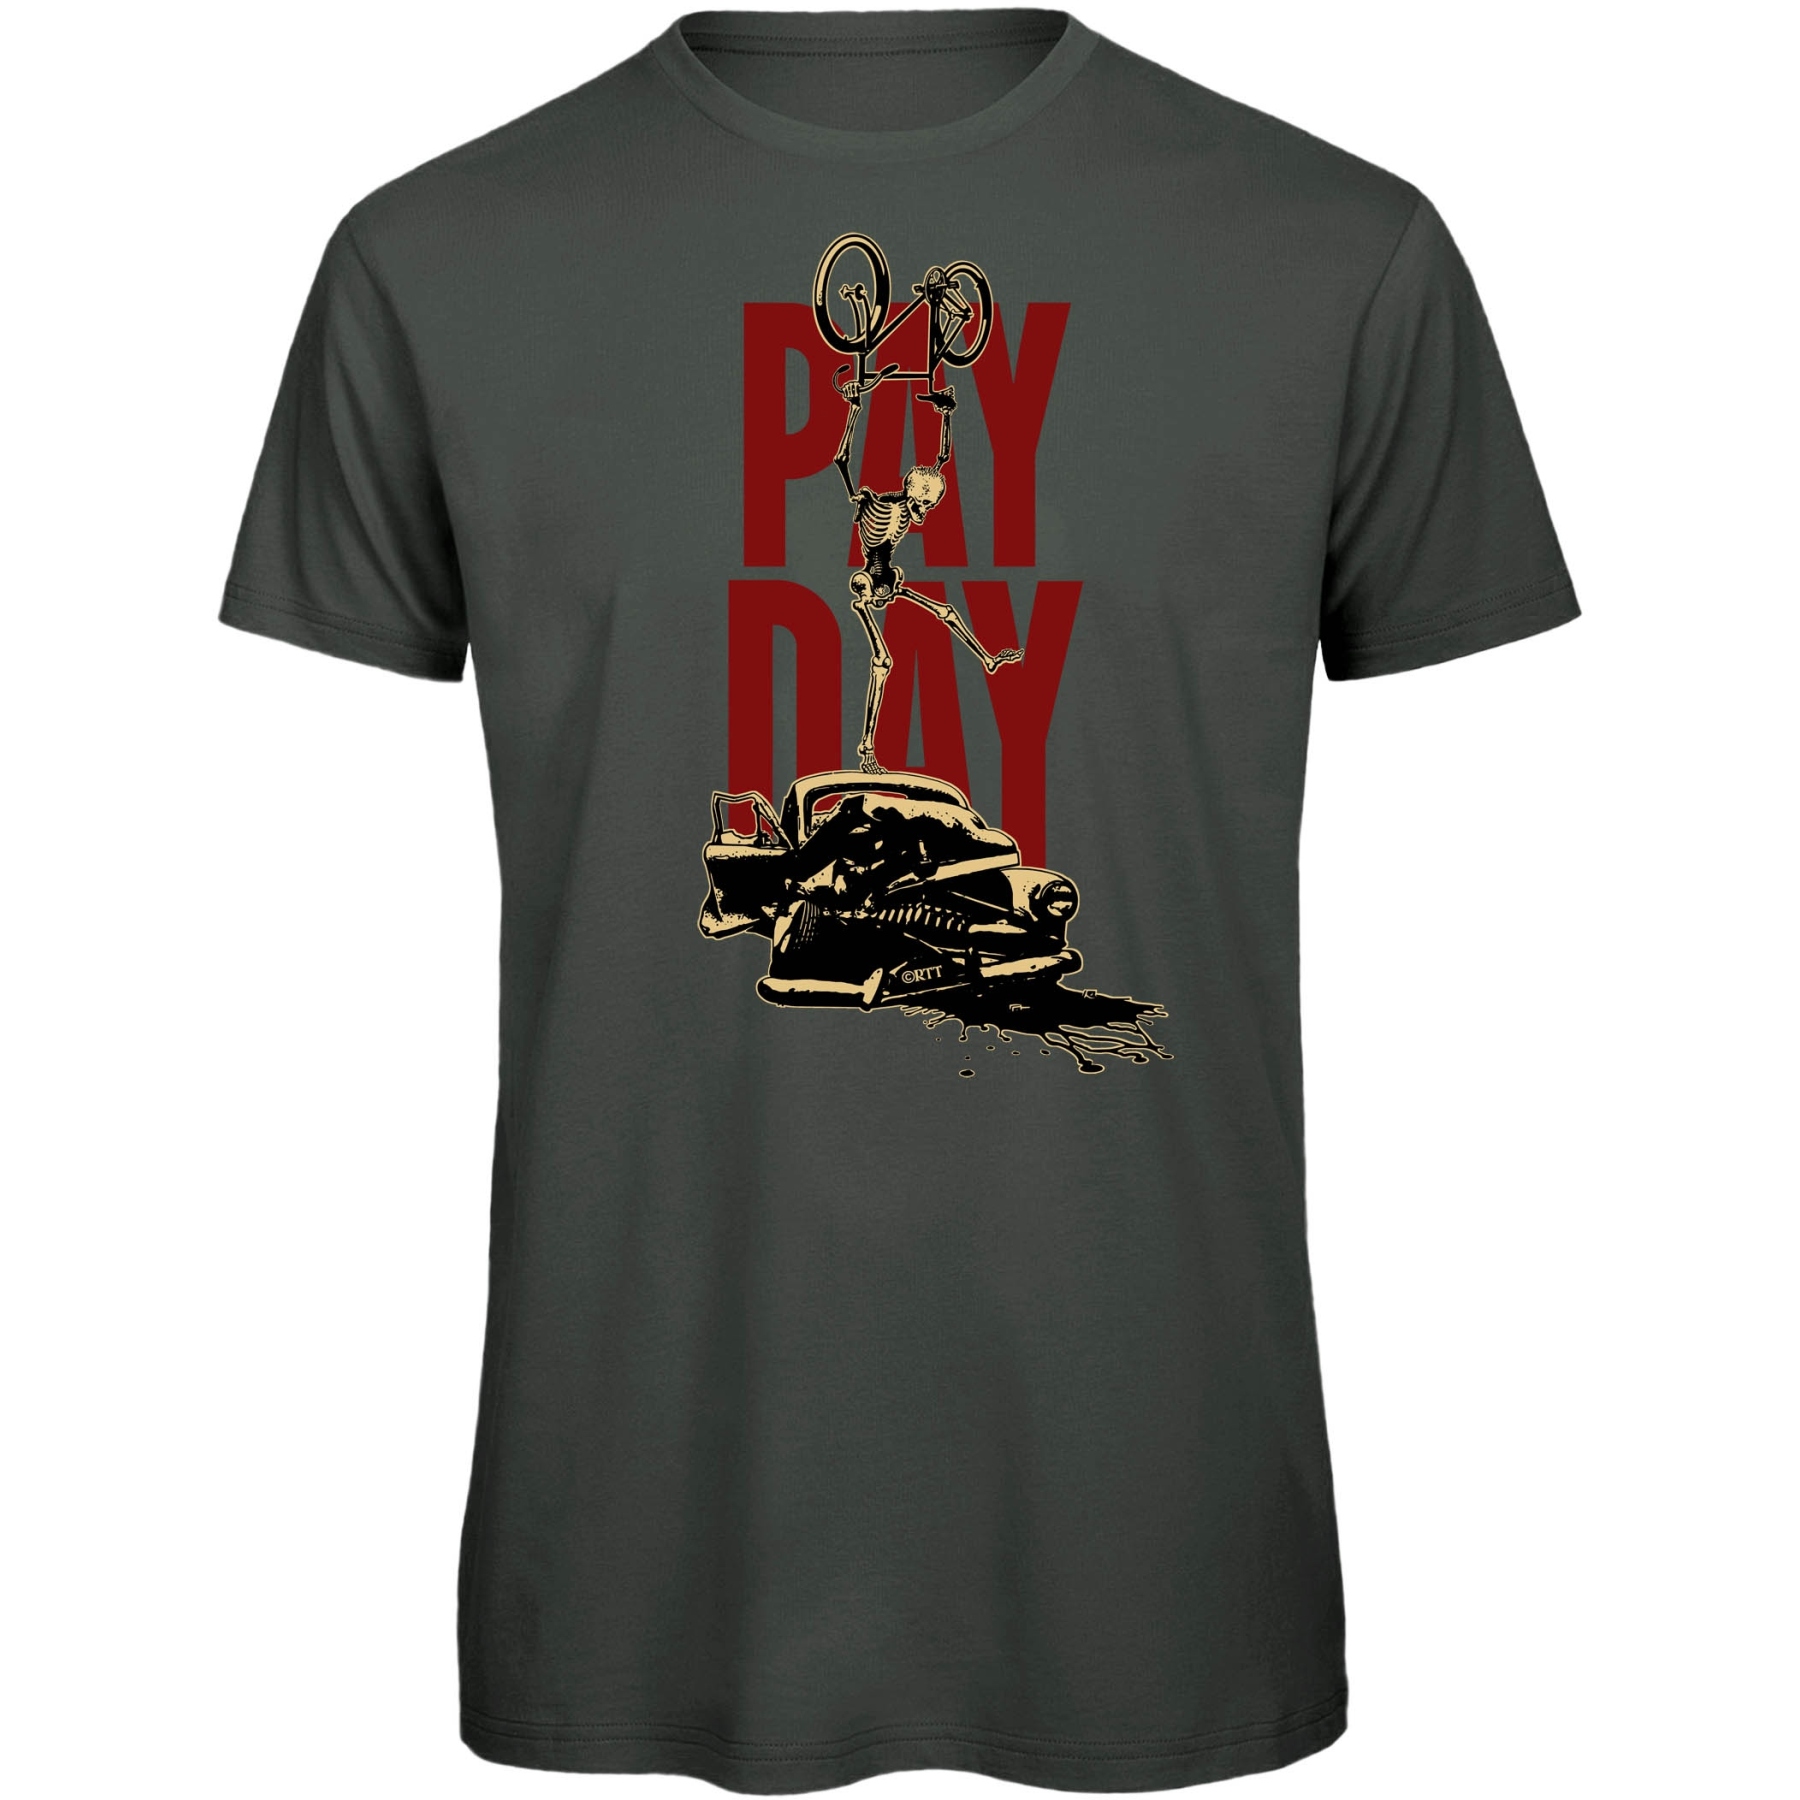 Imagen de RTTshirts Camiseta Bicicleta - PayDay - gris oscuro